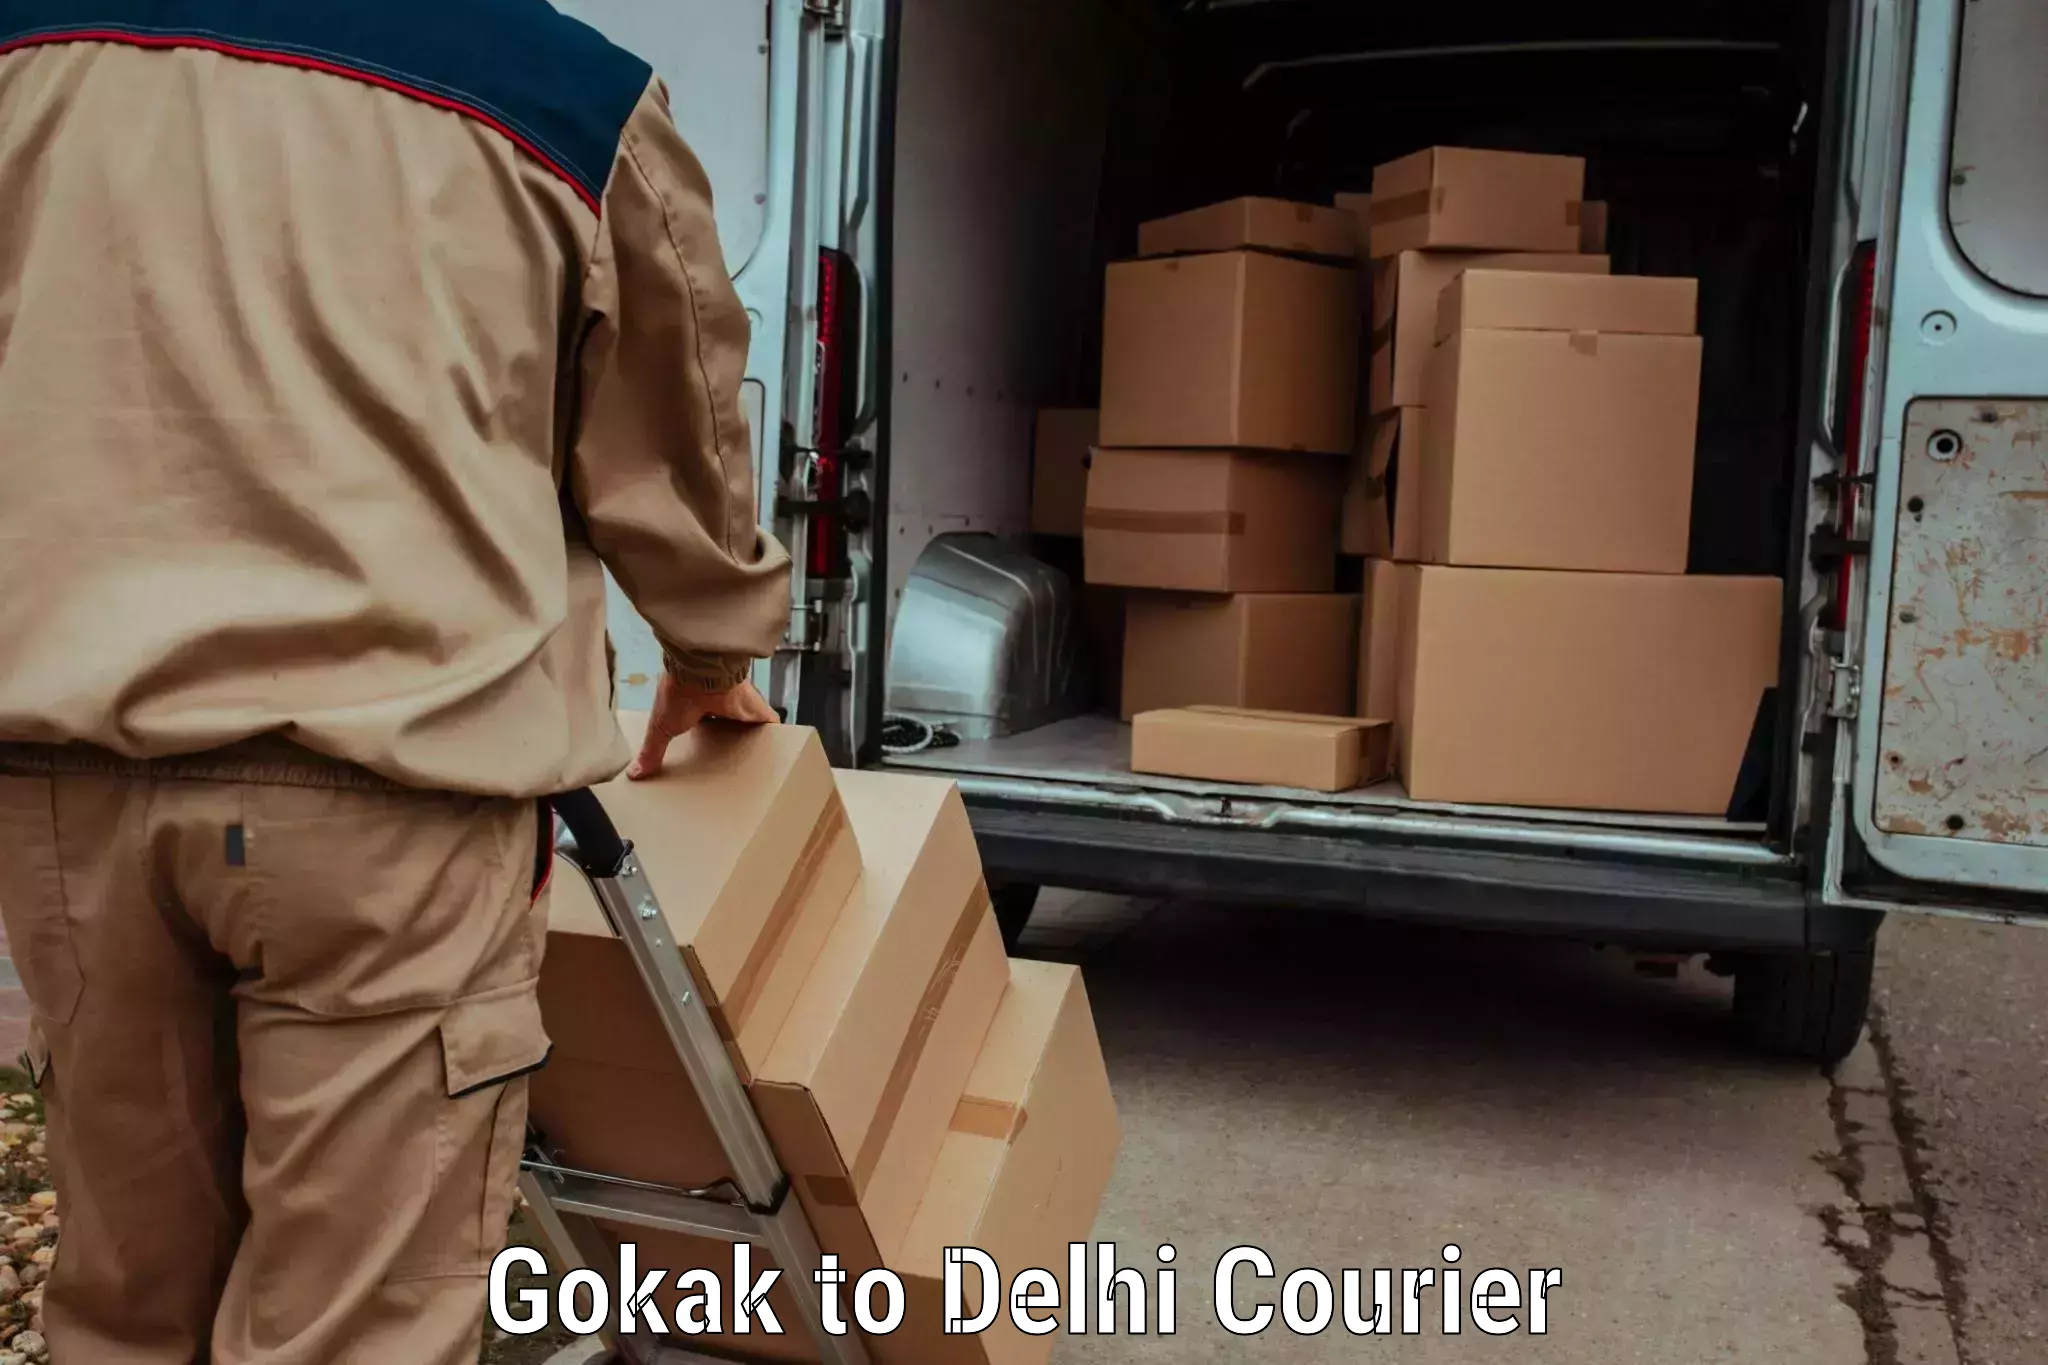 24-hour courier service Gokak to East Delhi